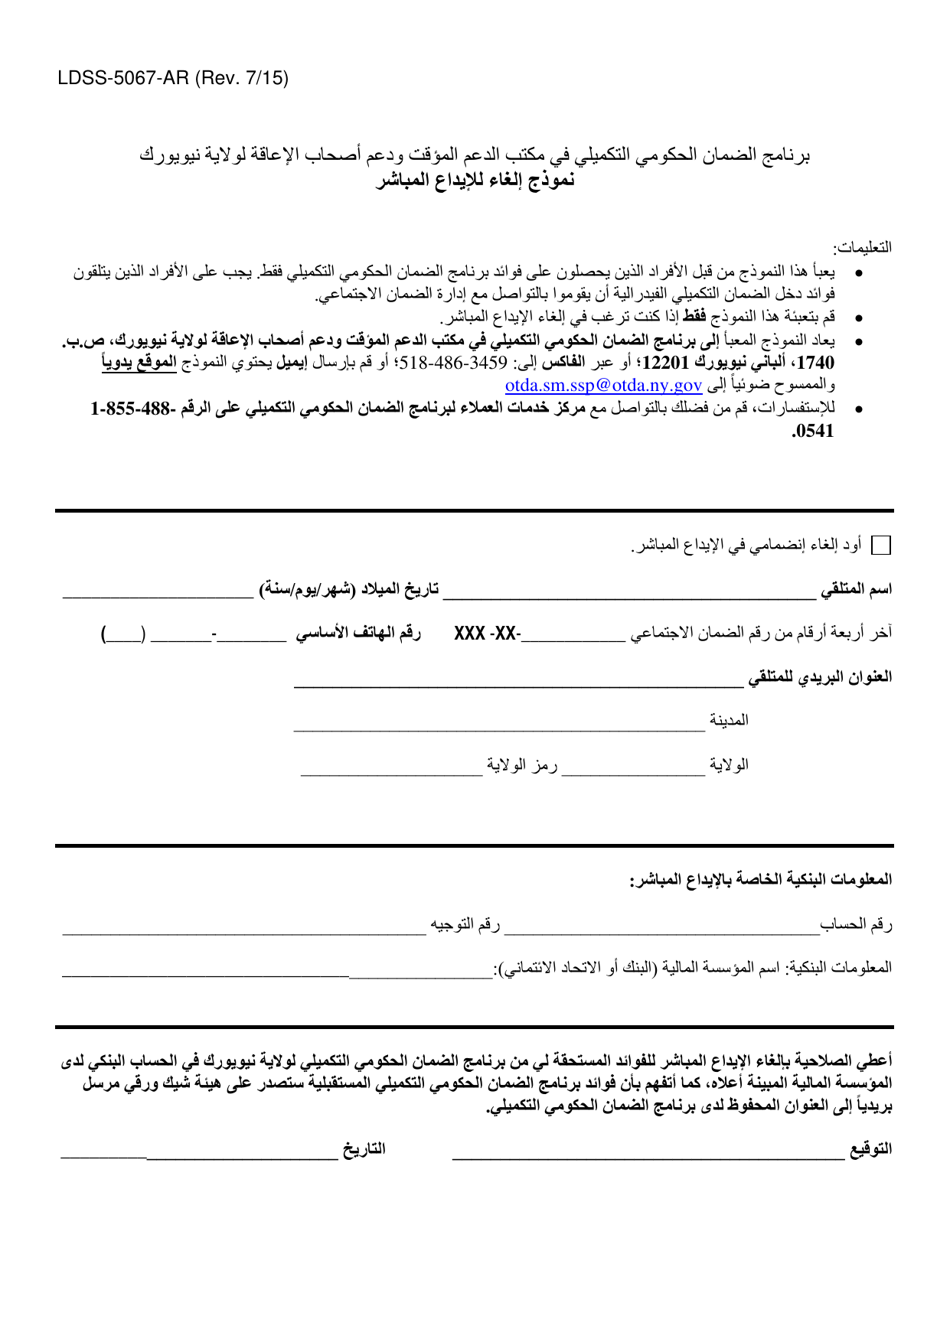 Form LDSS-5067 Direct Deposit Cancellation Form - New York (Arabic), Page 1